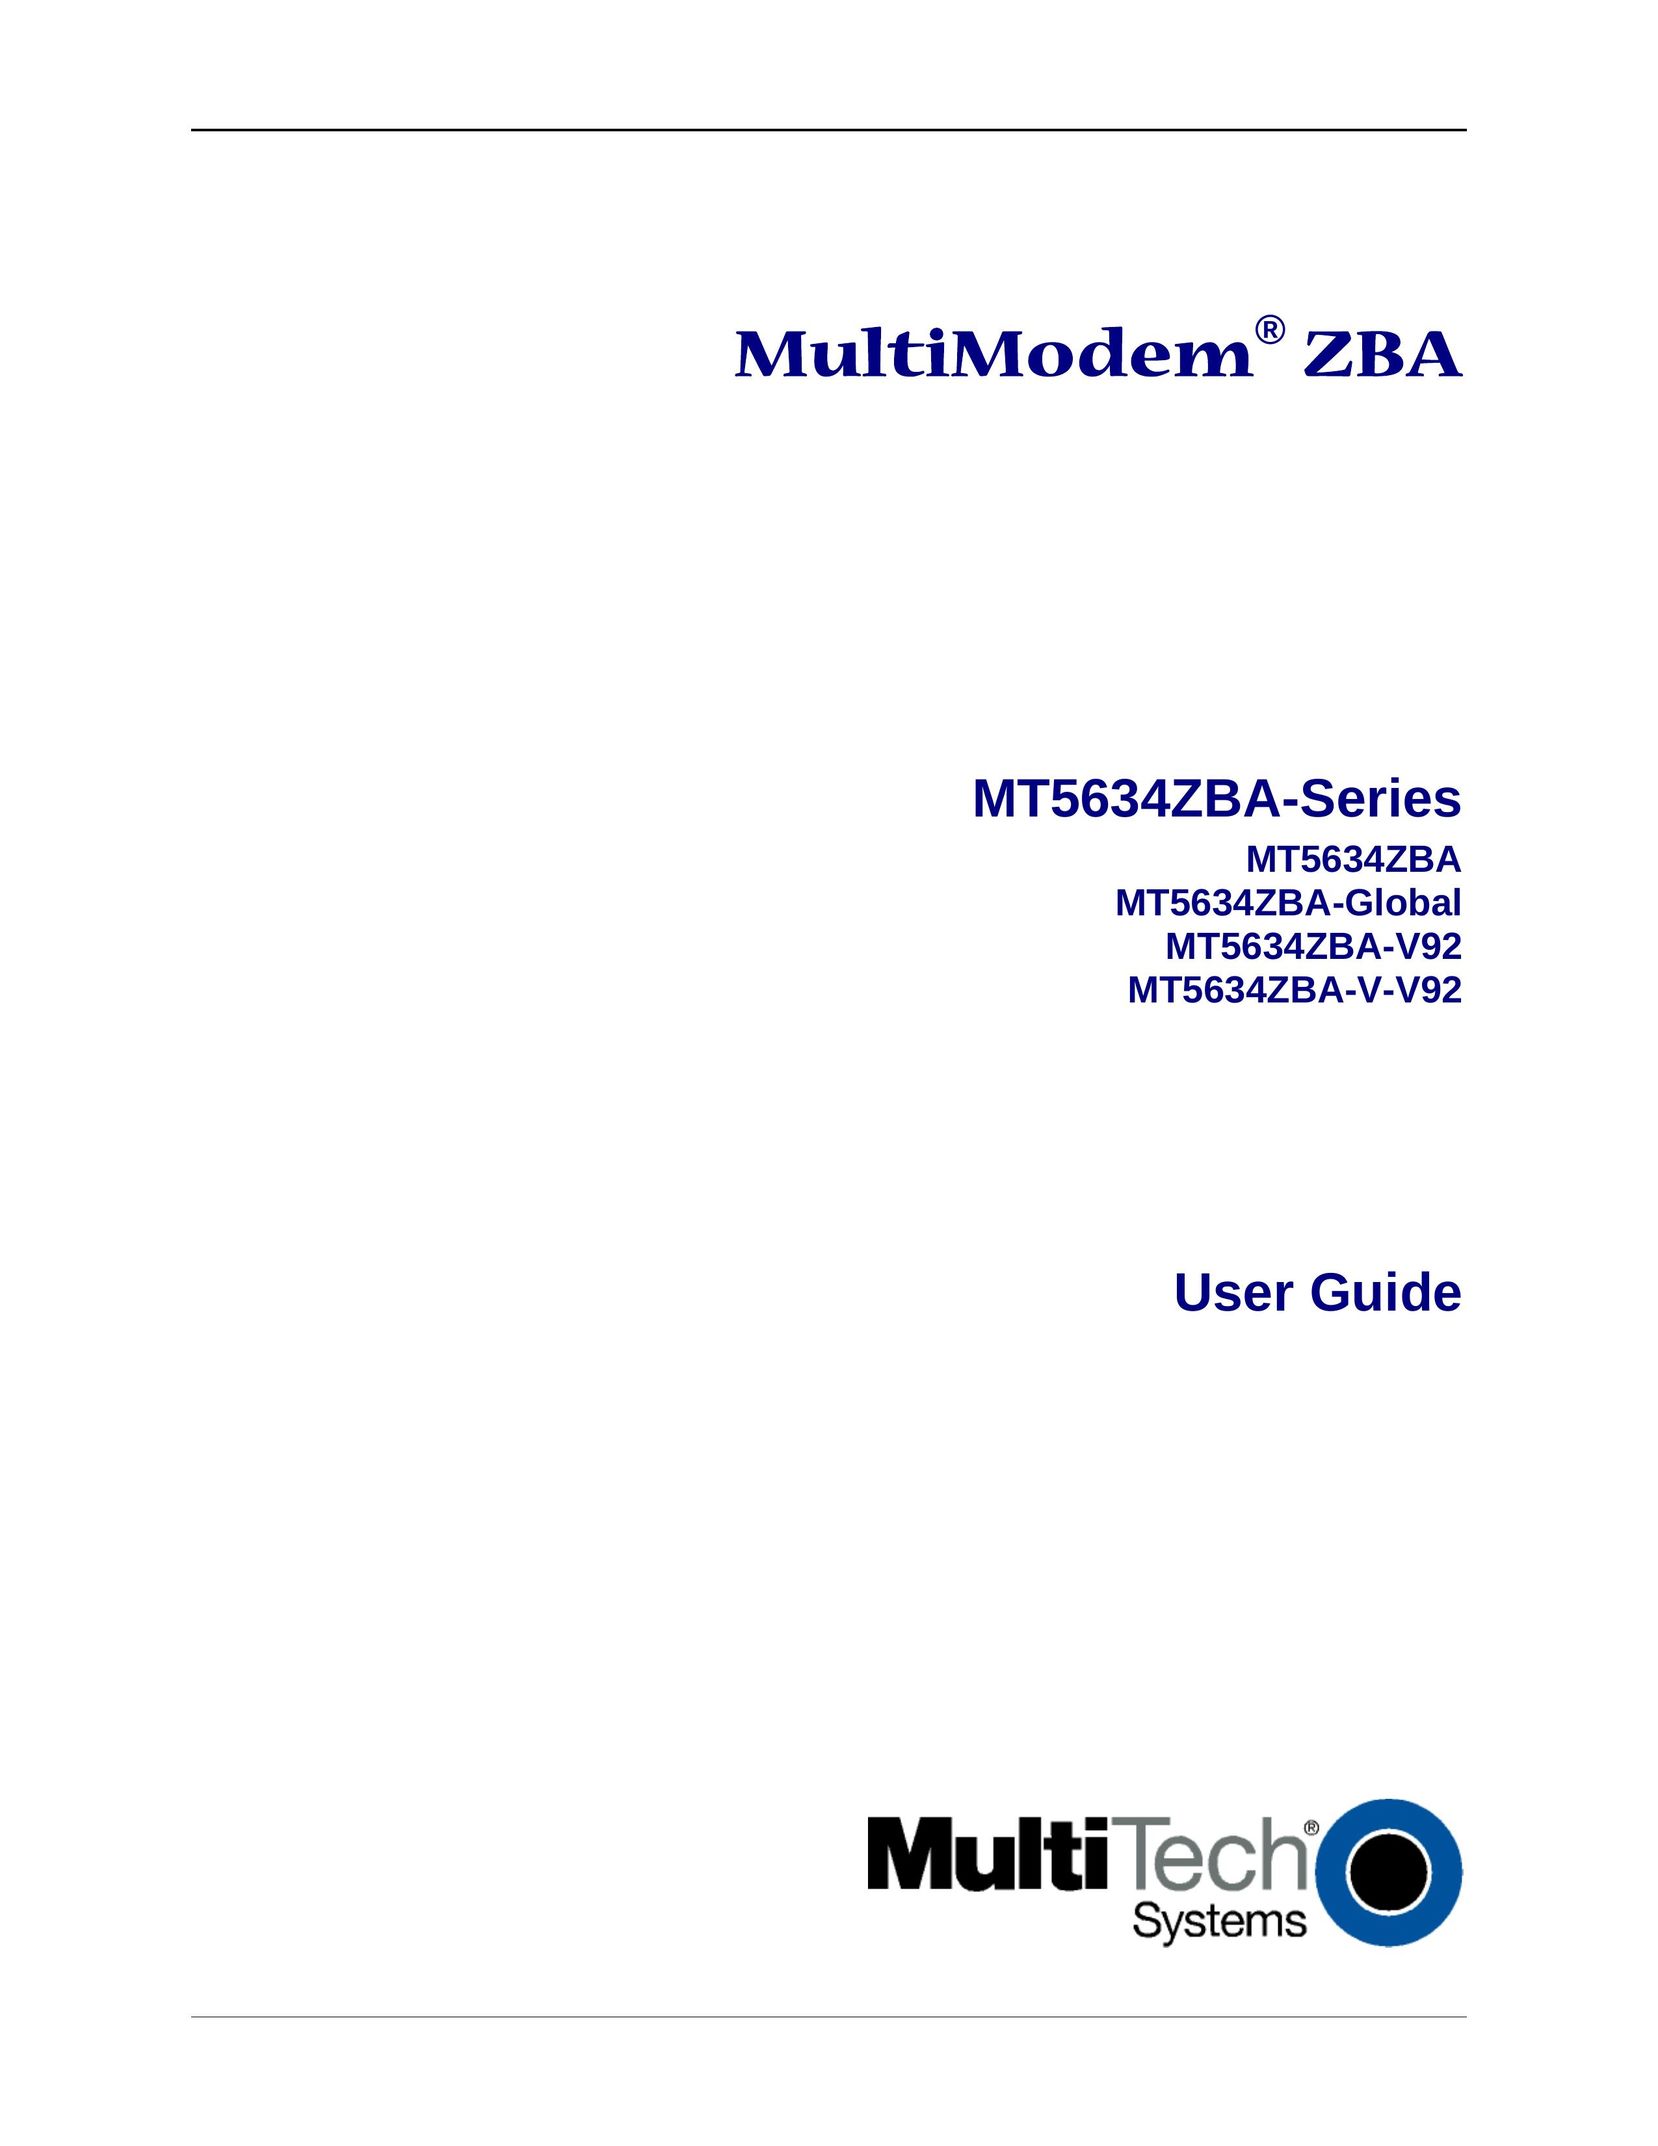 Multitech MT5634ZBA-GLOBAL Modem User Manual